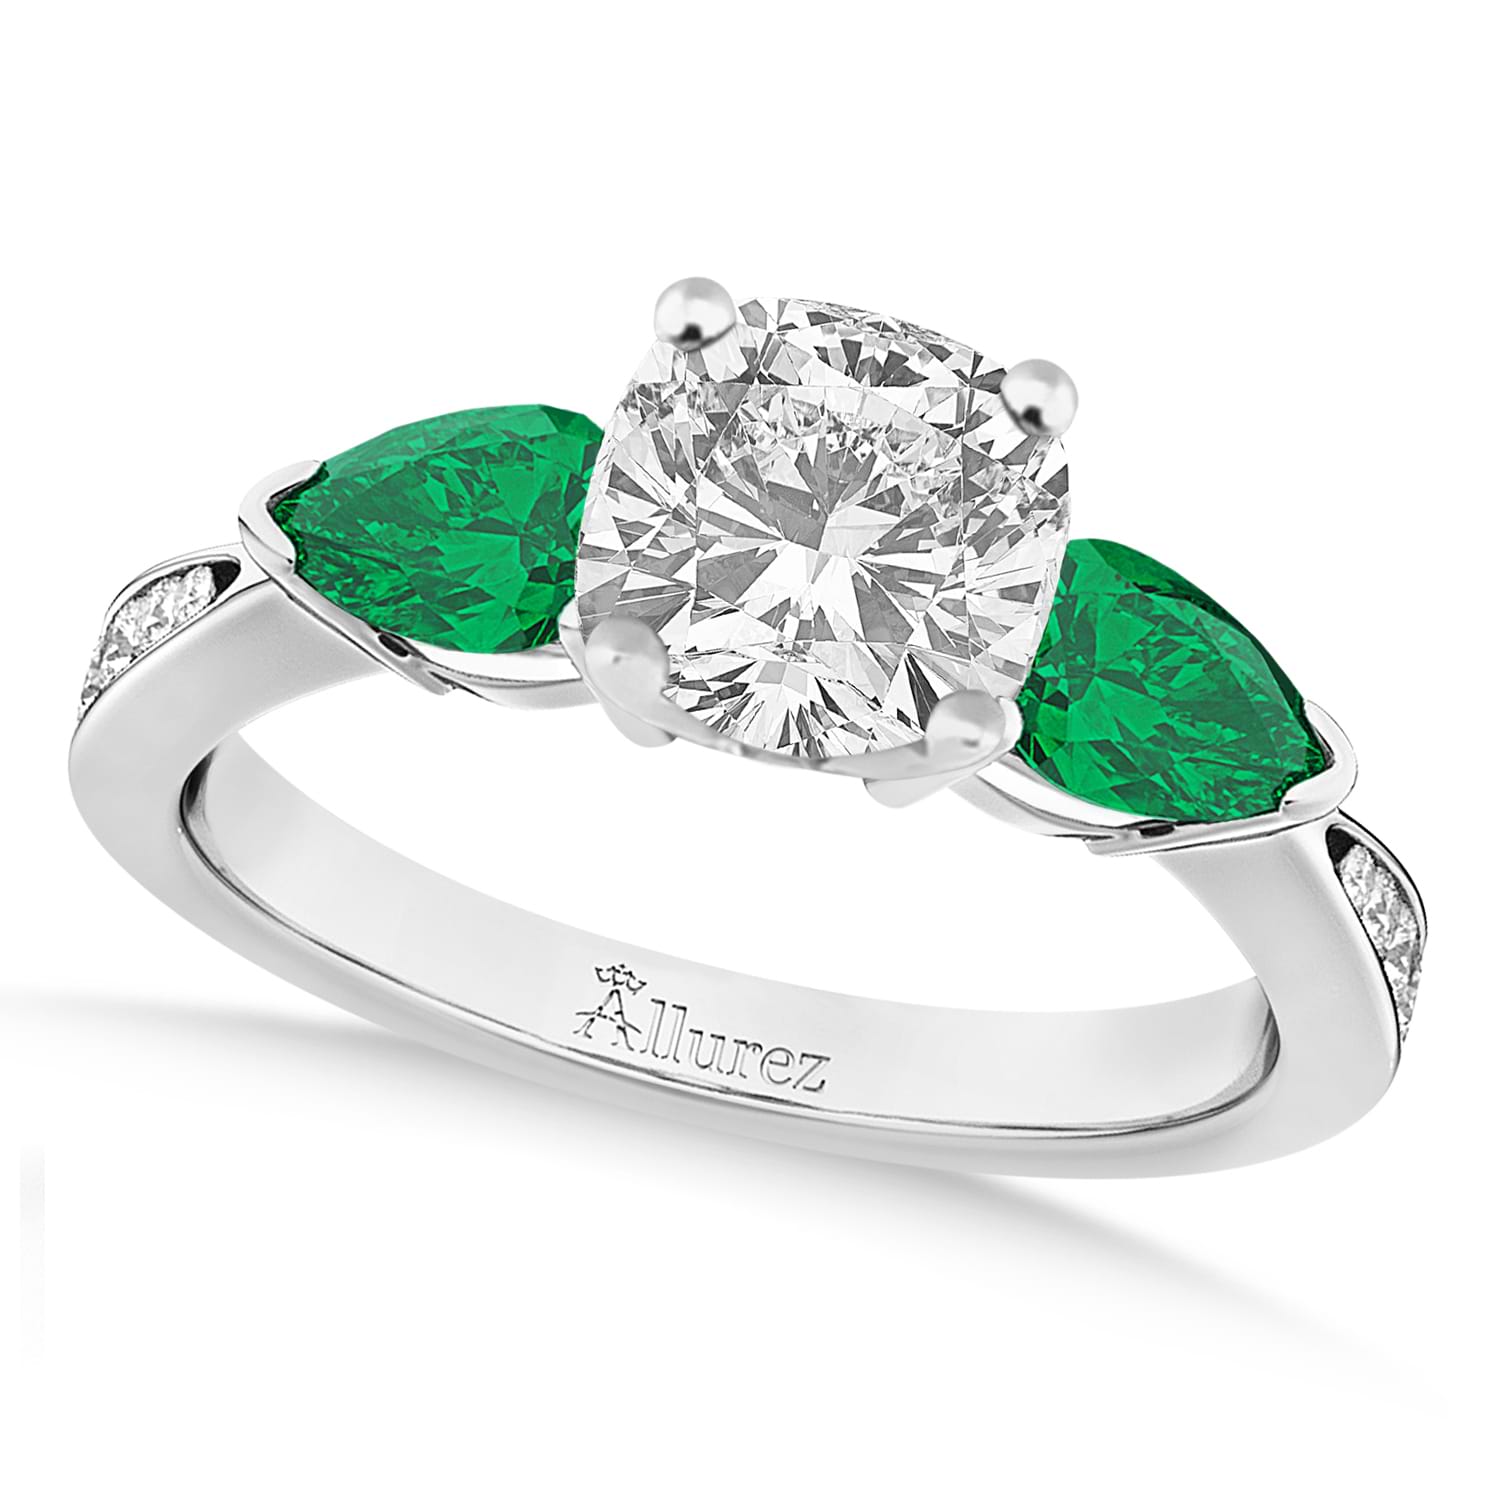 Cushion Diamond & Pear Green Emerald Engagement Ring 18k White Gold (1.29ct)